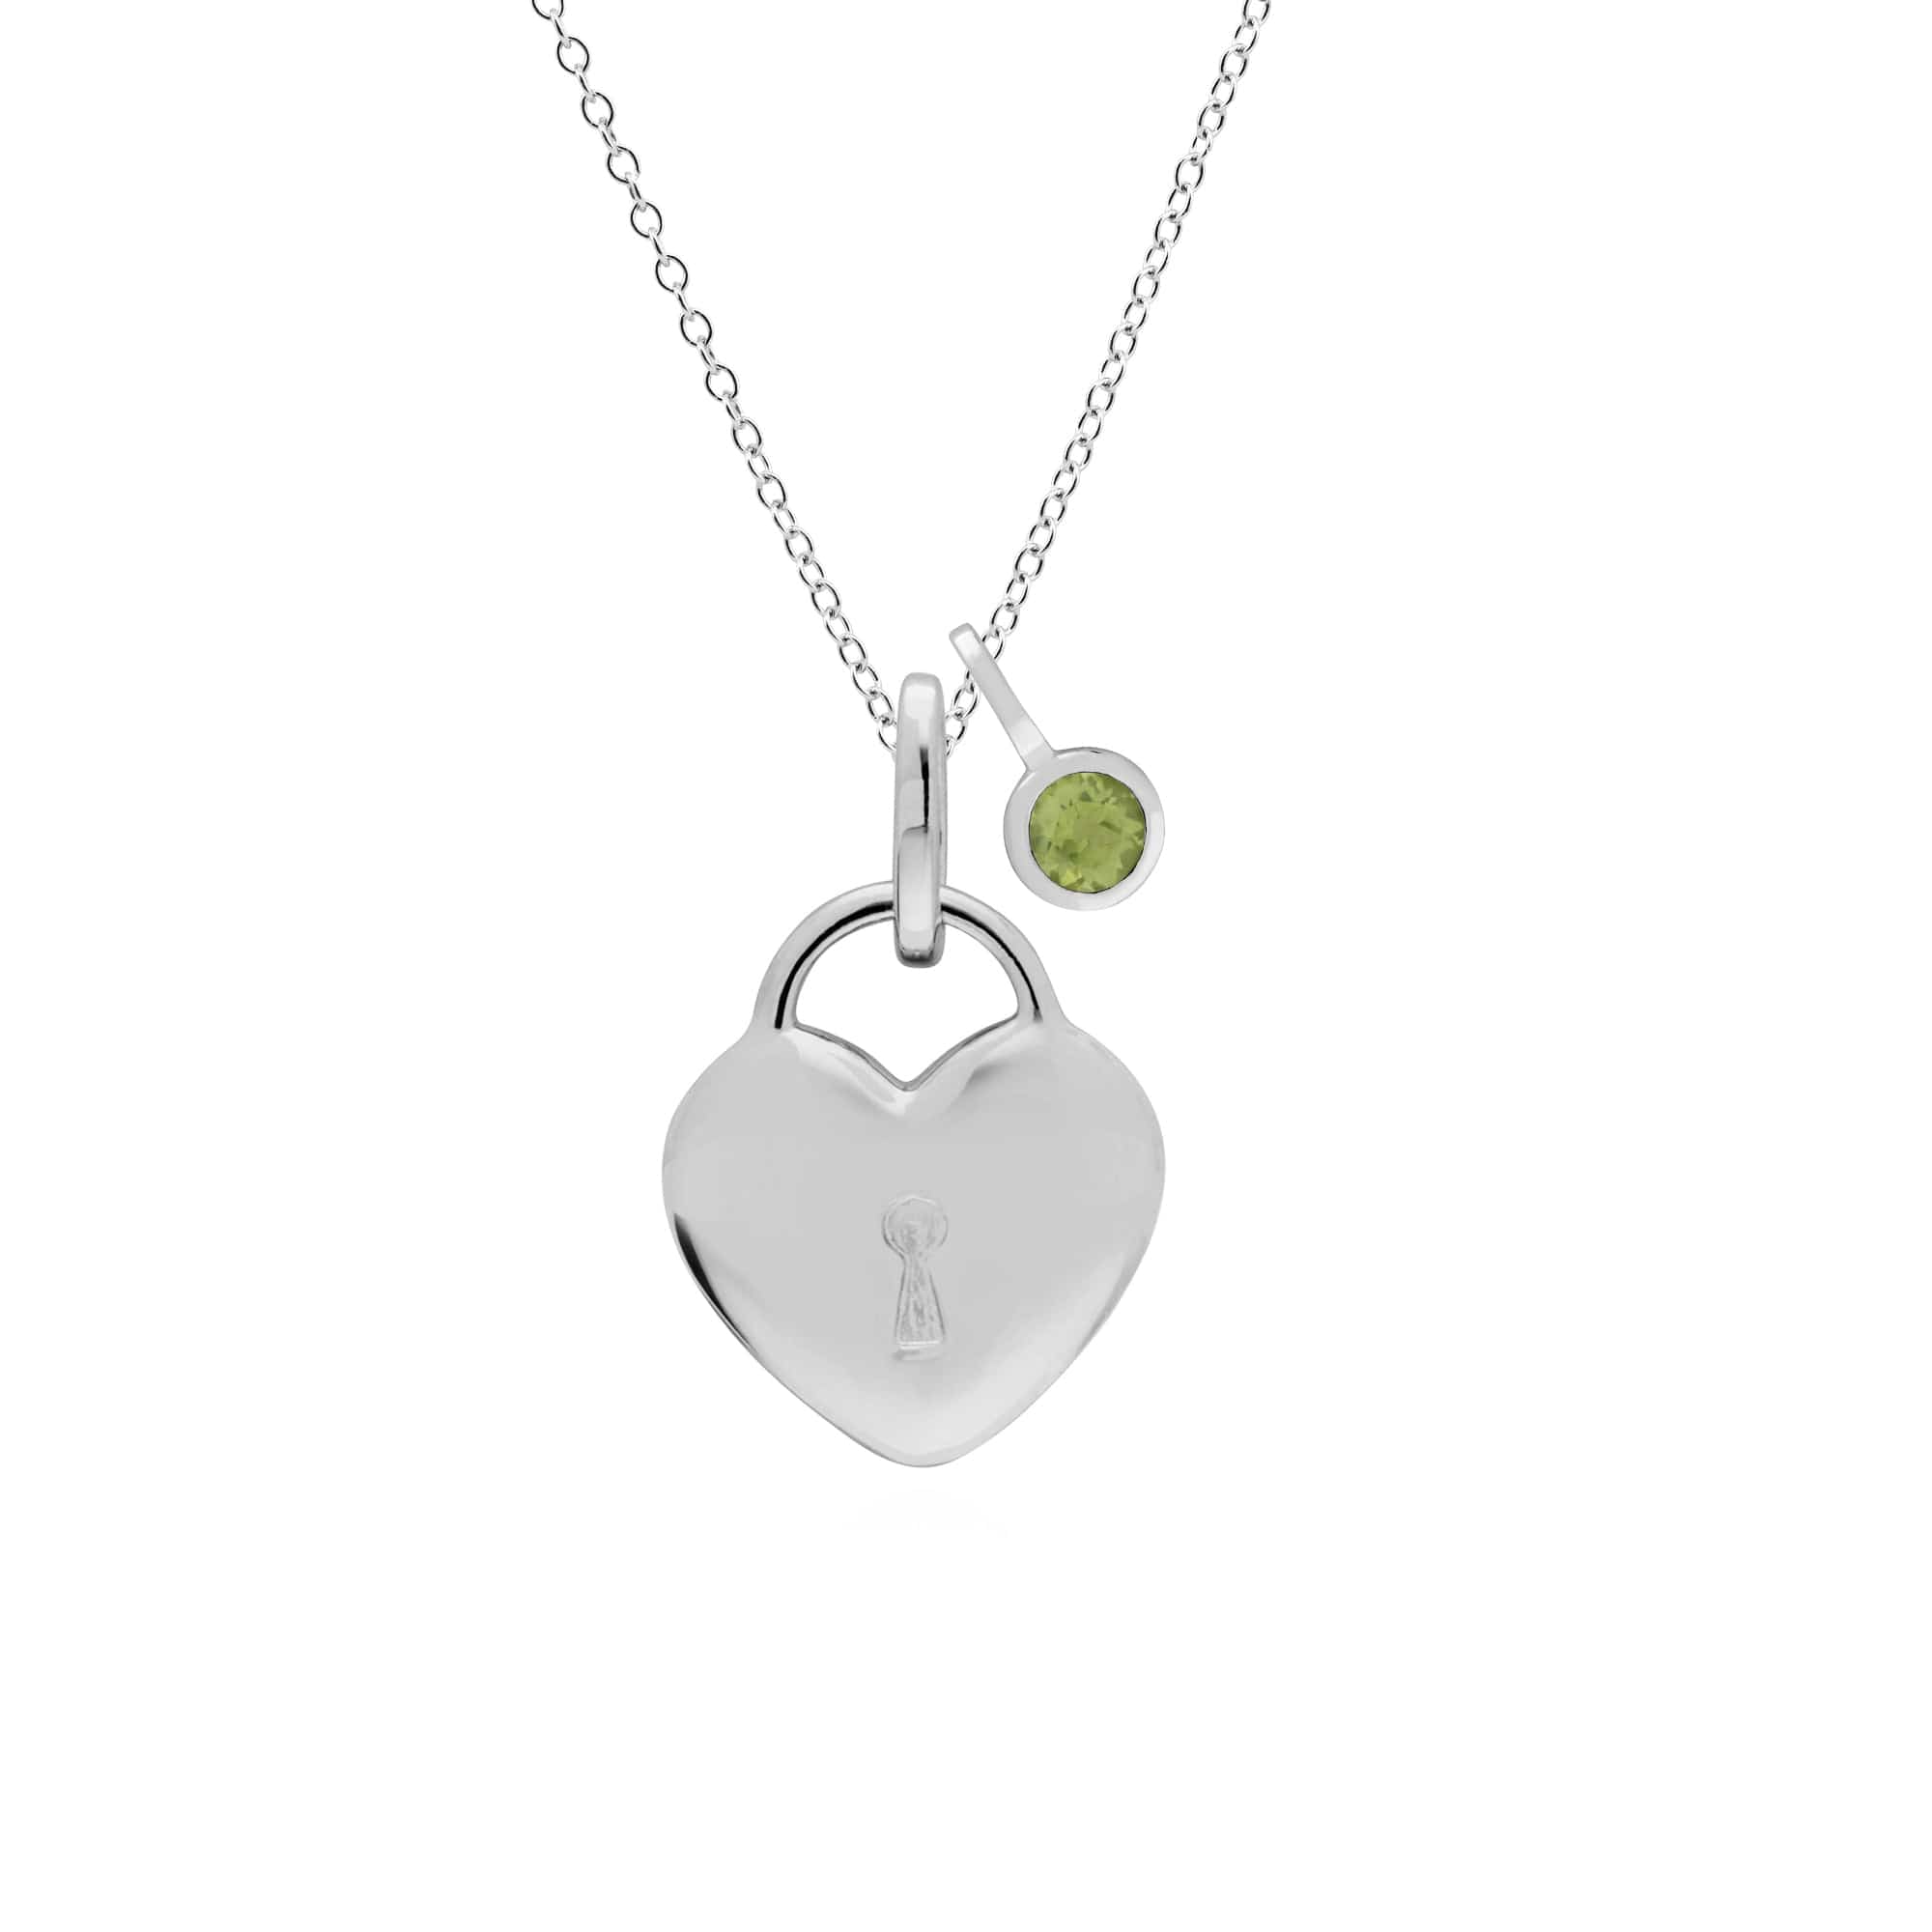 270P027605925-270P027001925 Classic Heart Lock Pendant & Peridot Charm in 925 Sterling Silver 1